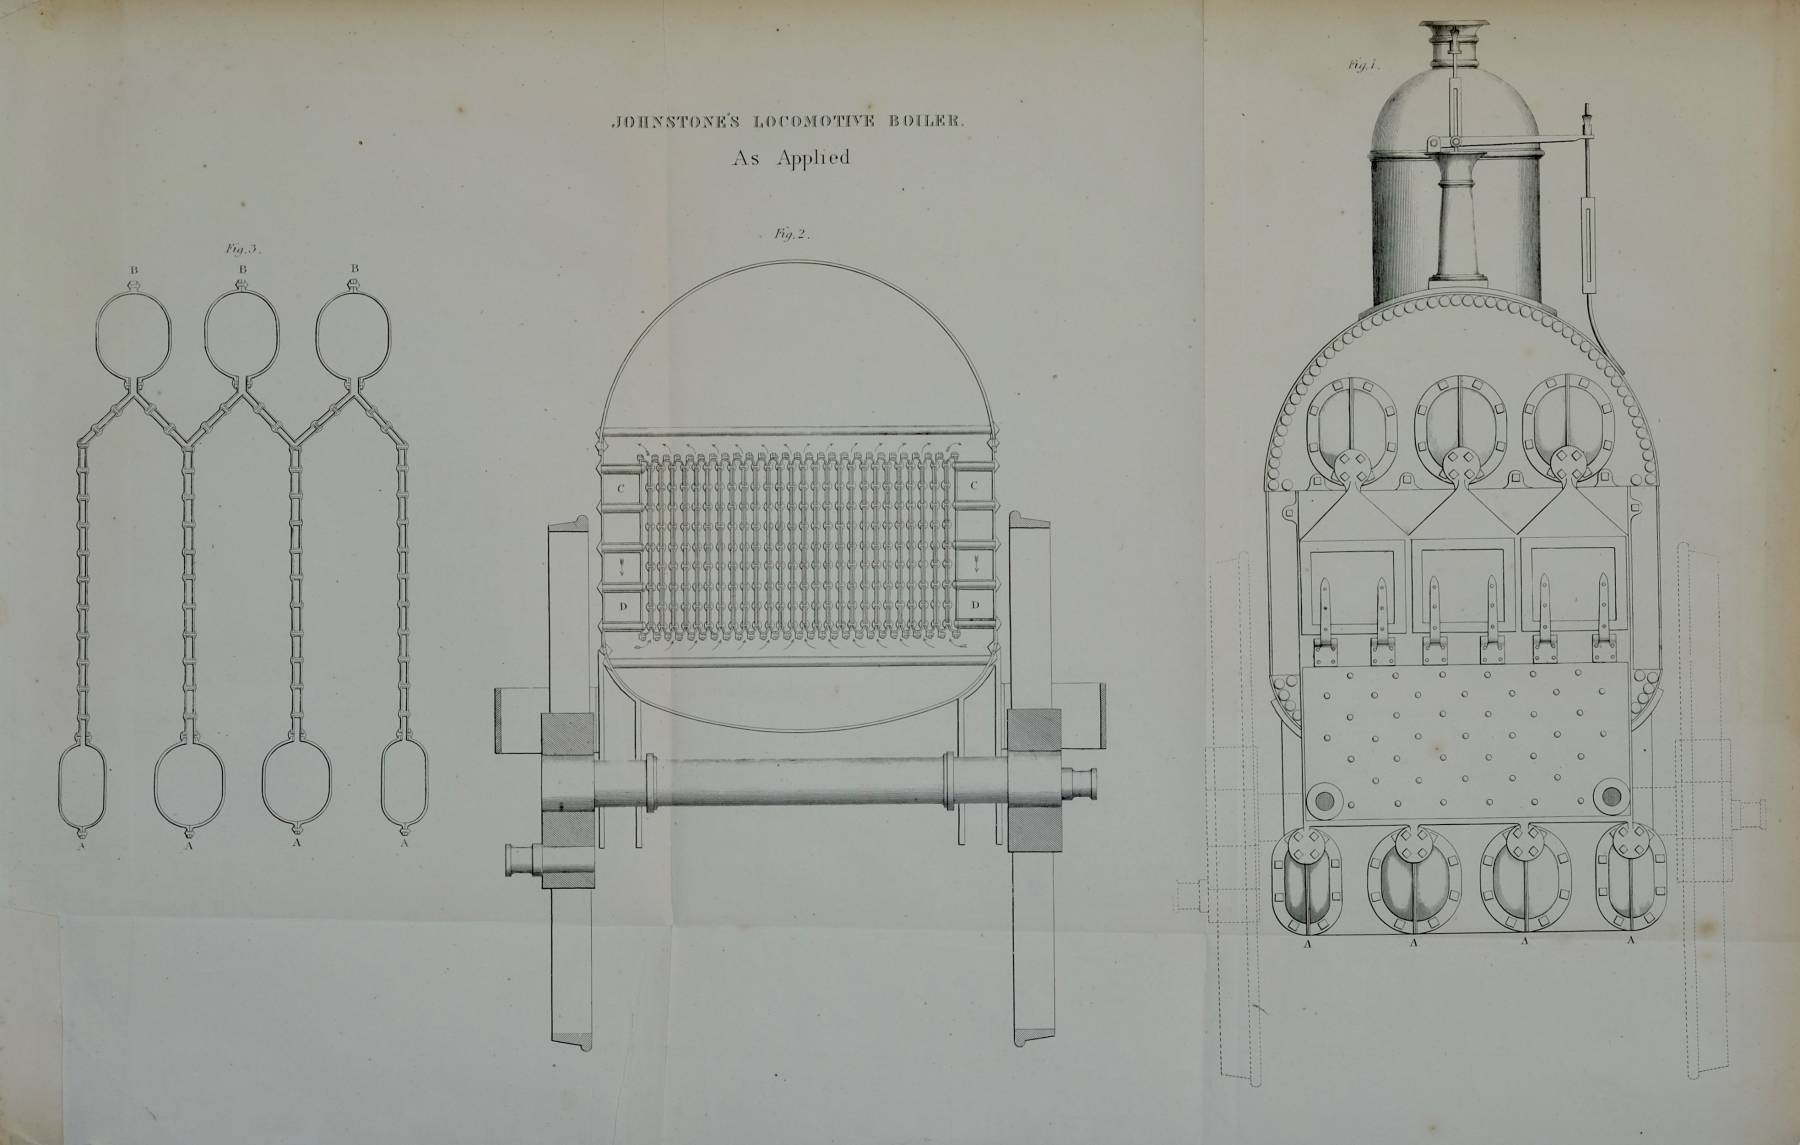 Johnstone's Locomotive Boiler